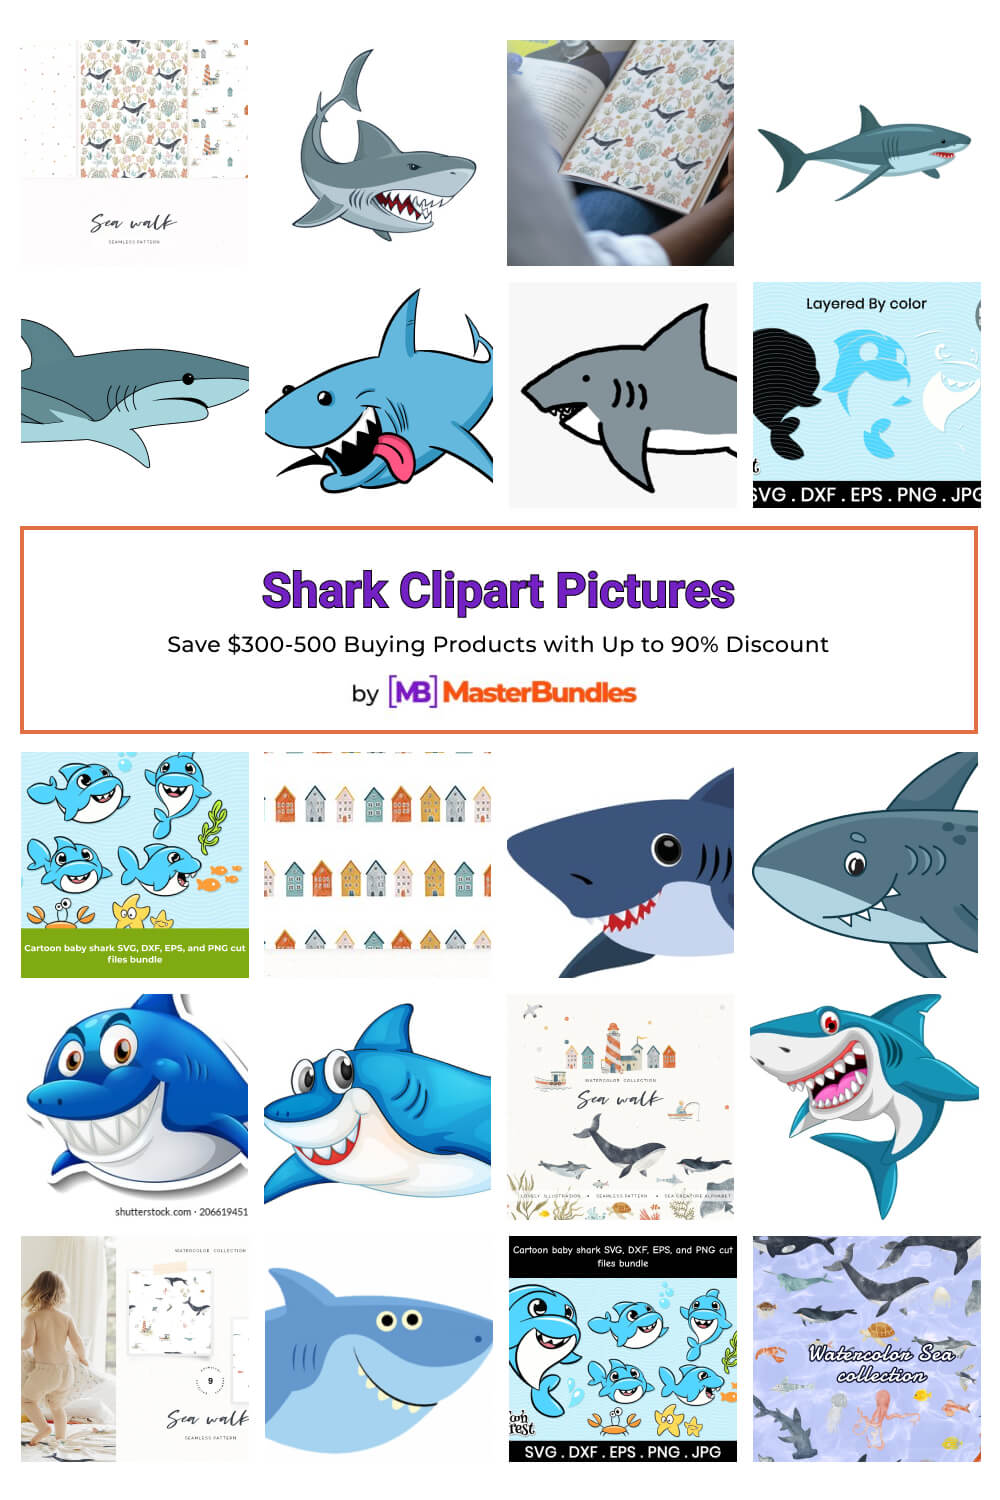 shark clipart pictures pinterest image.